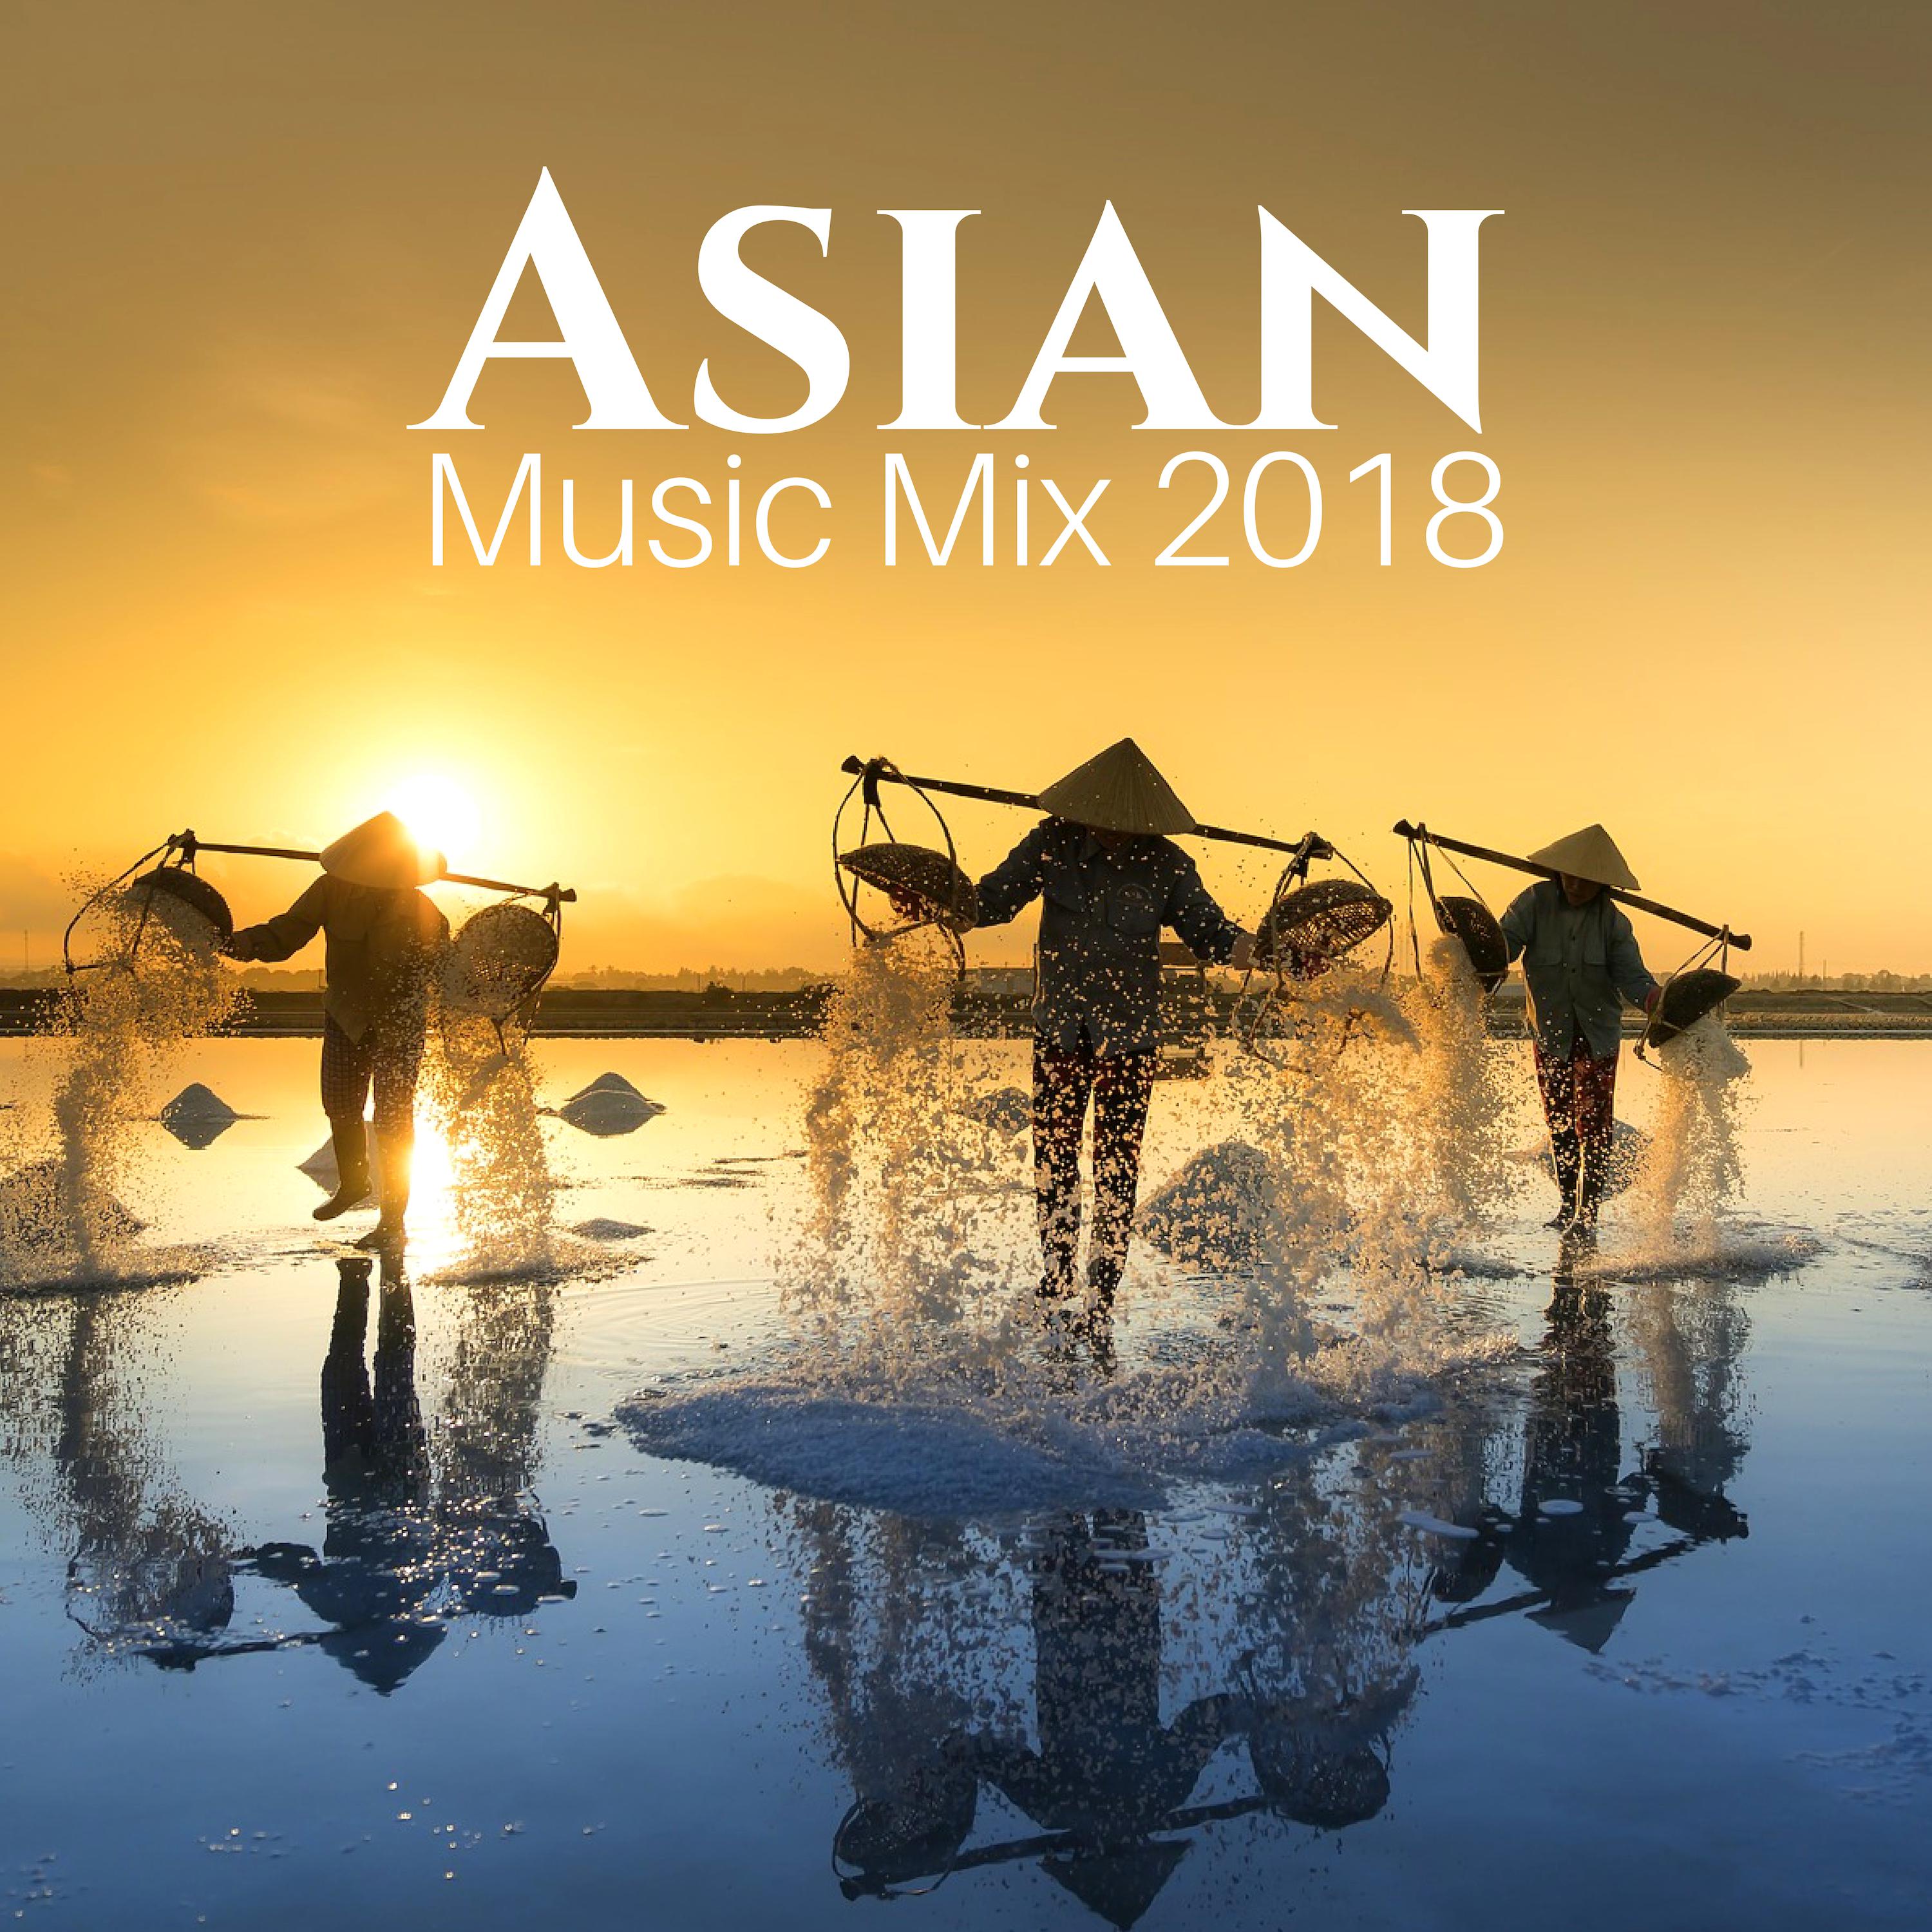 Asian Music Mix 2018 - Ohm Meditation Music, Nature Sounds, Tibetan Bowls